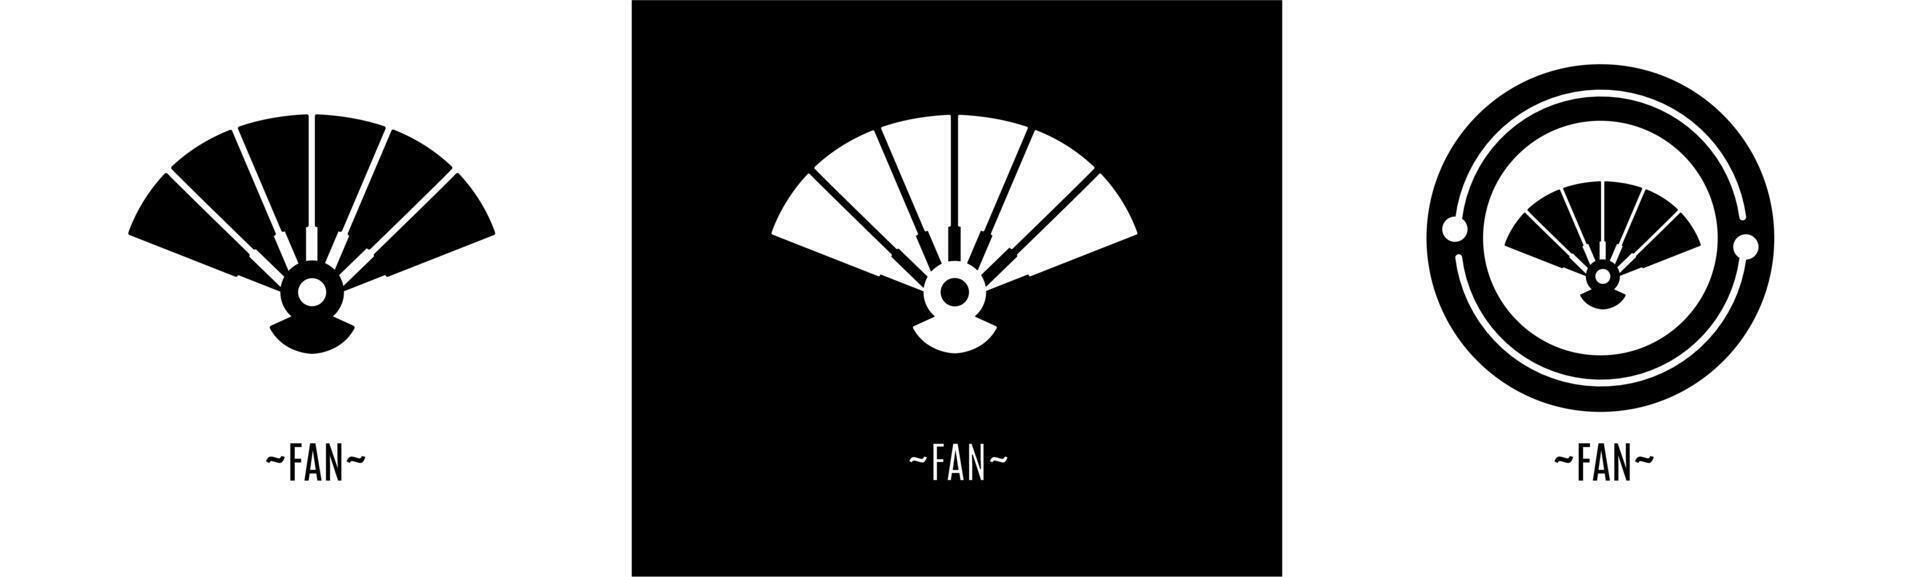 Fan logo set. Collection of black and white logos. Stock vector. vector